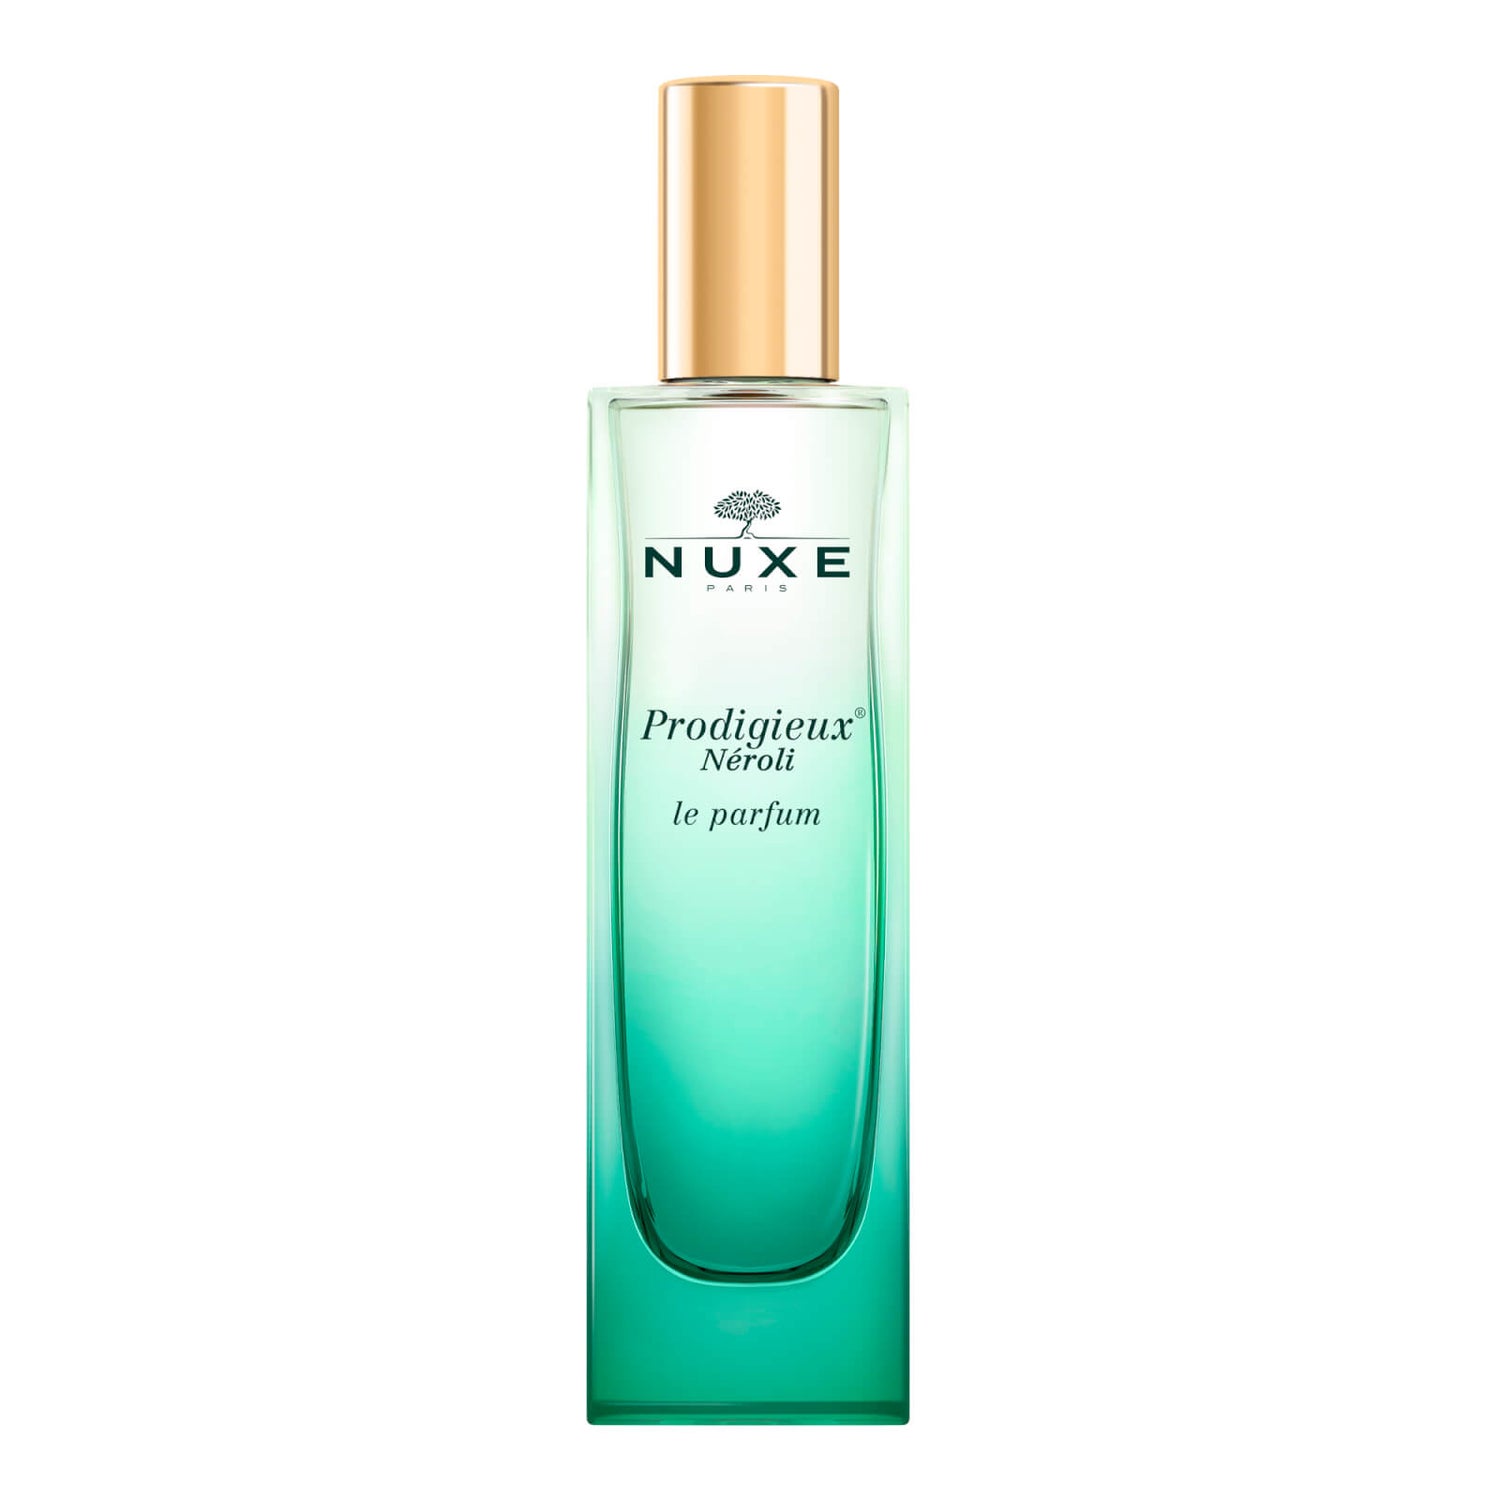 Prodigieux® Néroli Le parfum 50ml